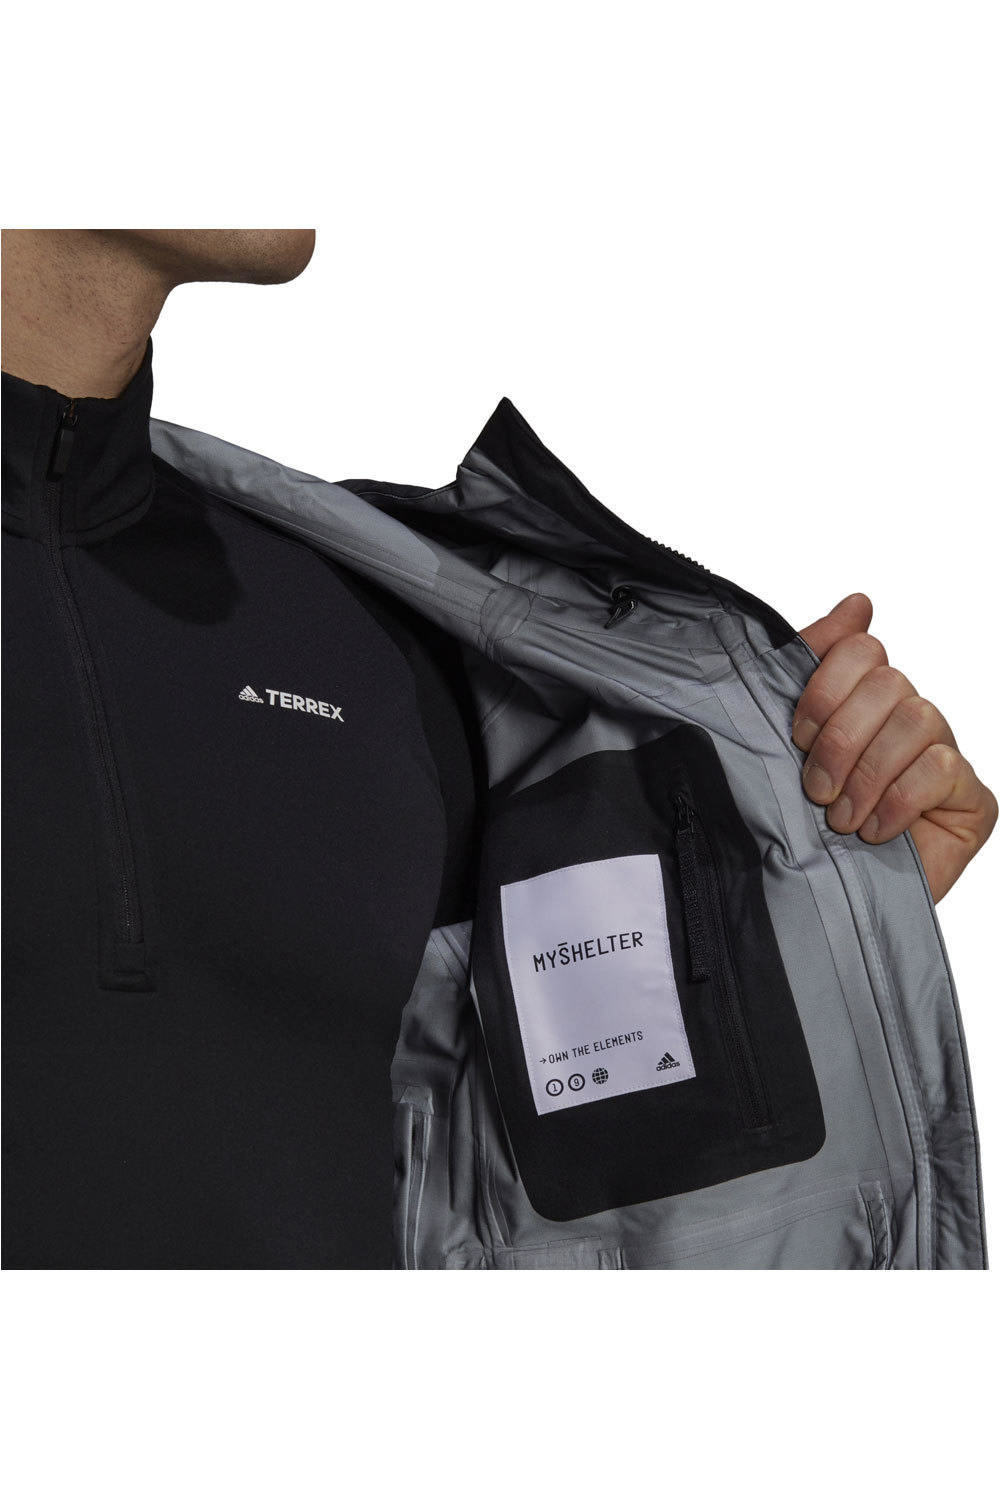 adidas chaqueta impermeable hombre Terrex MYSHELTER GORE-TEX Active 04